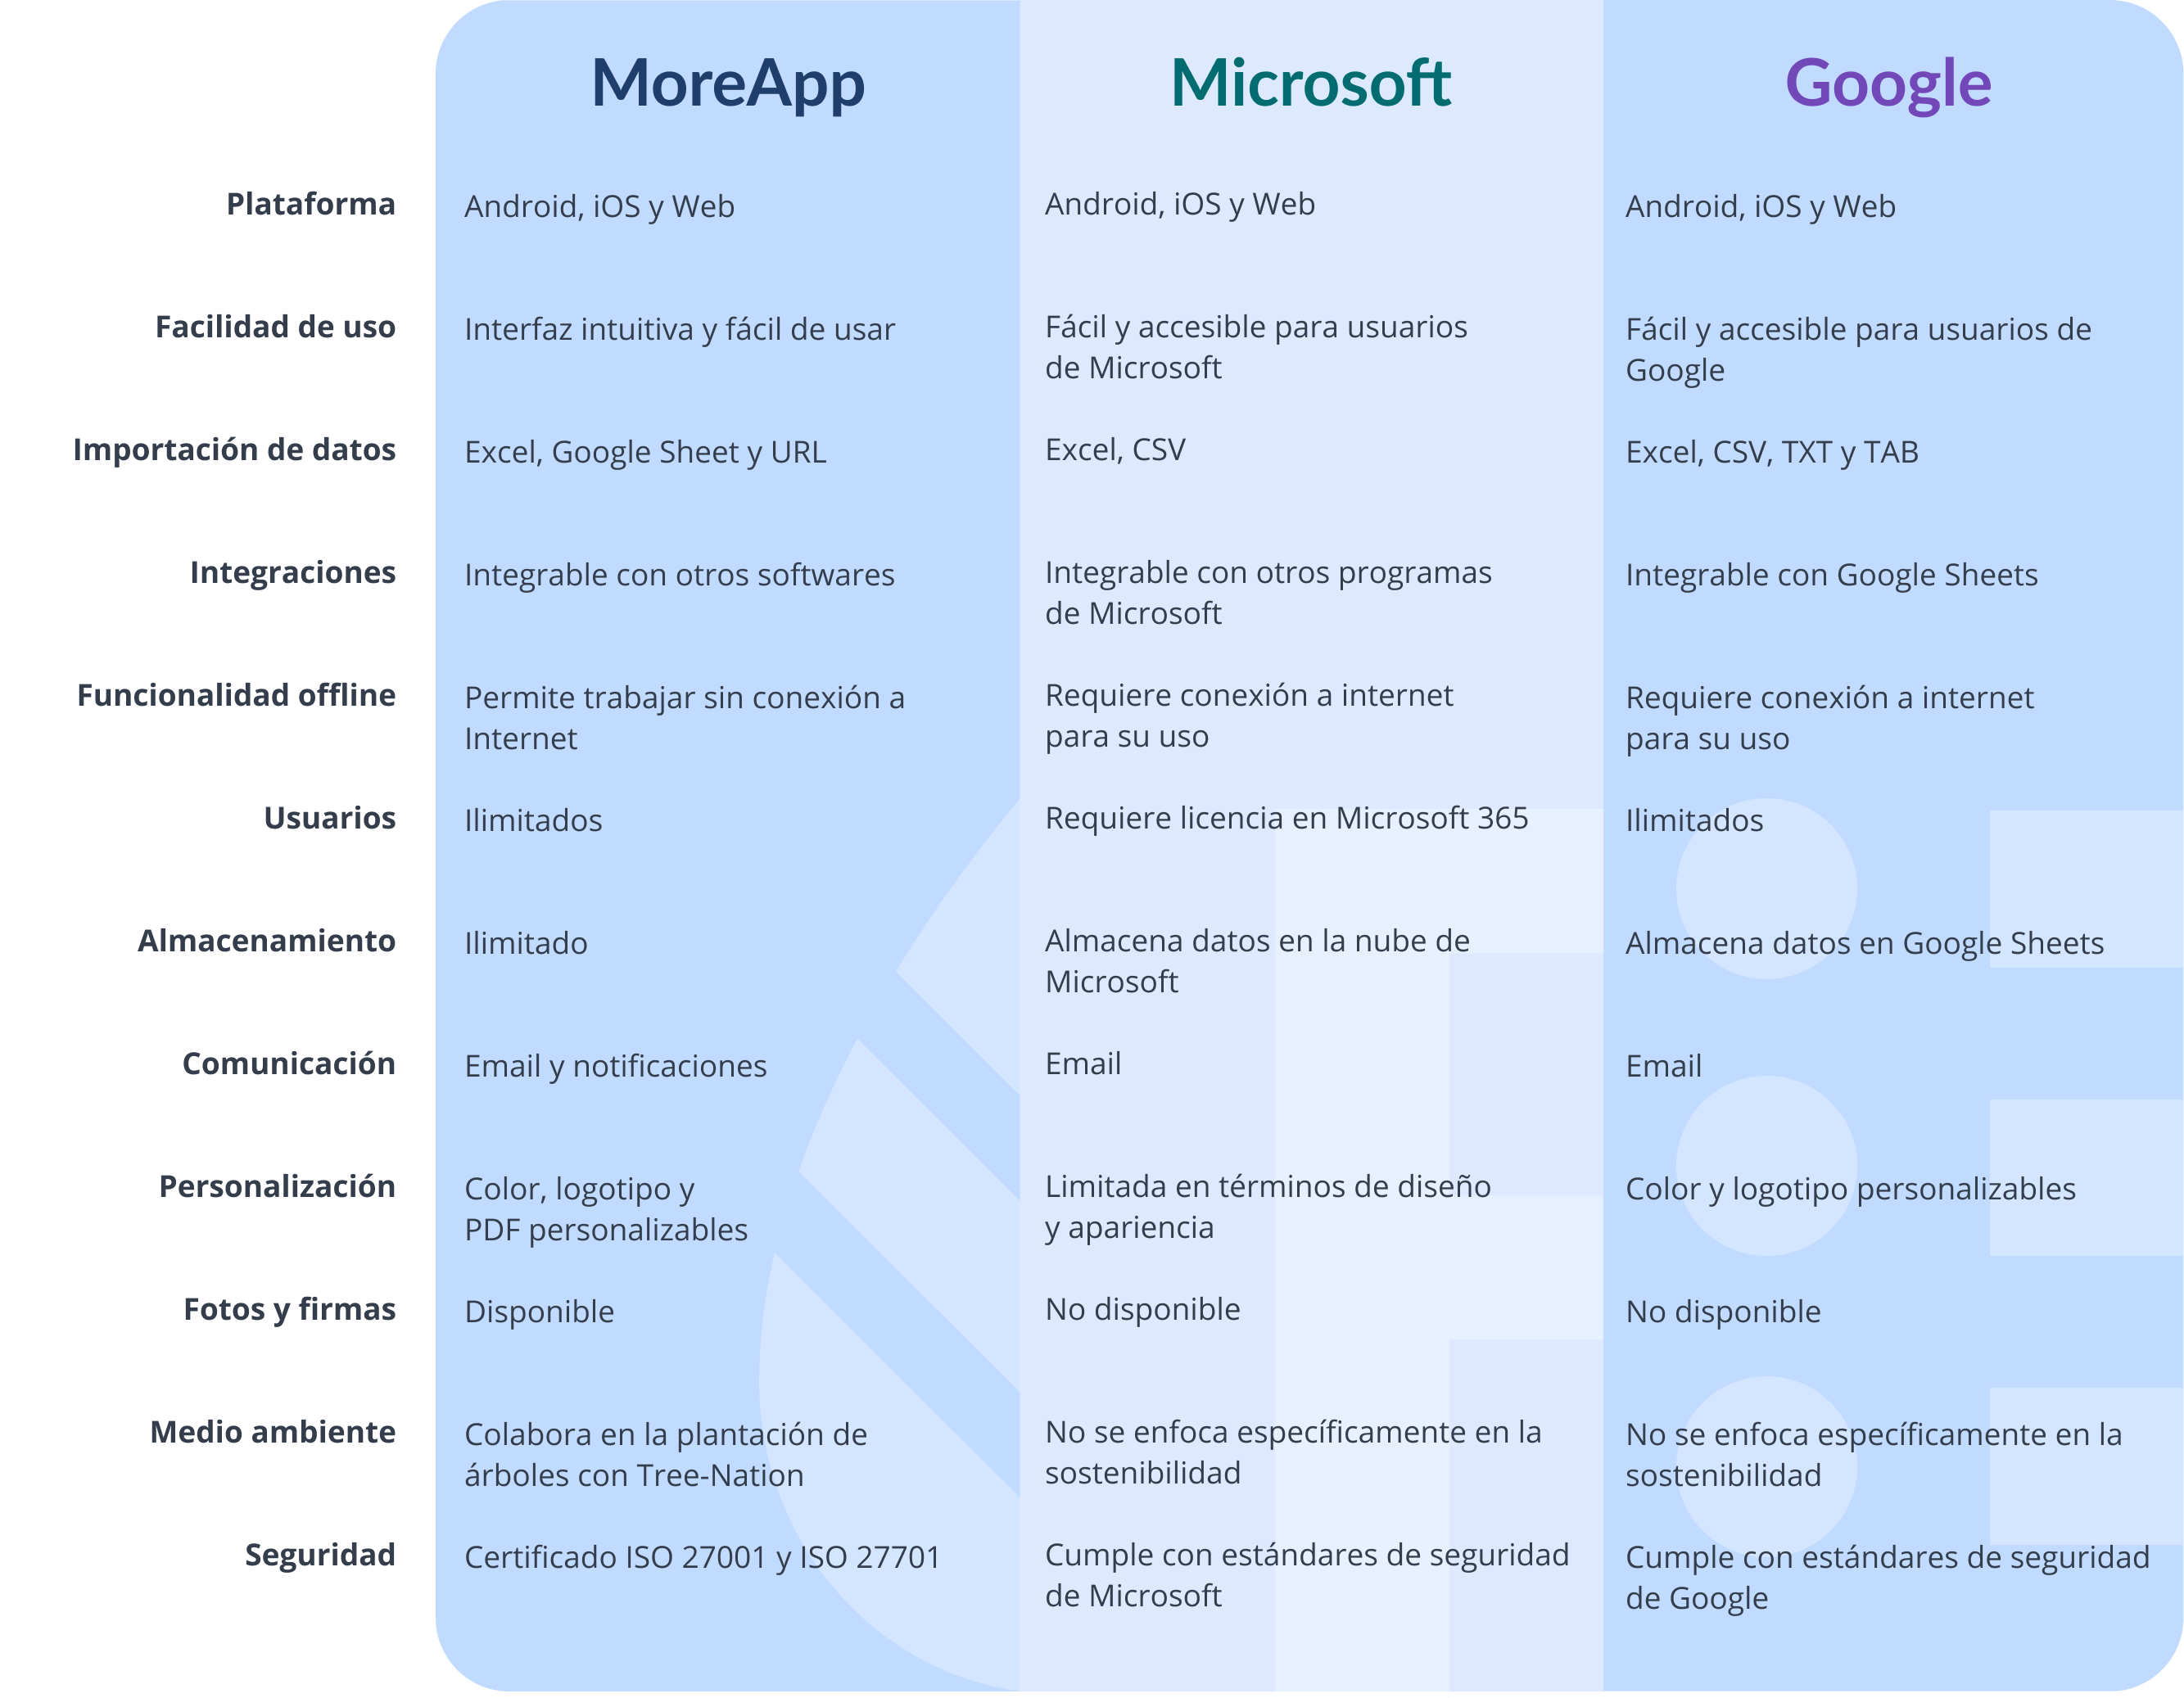 Comparativa entre Plataformas MoreApp